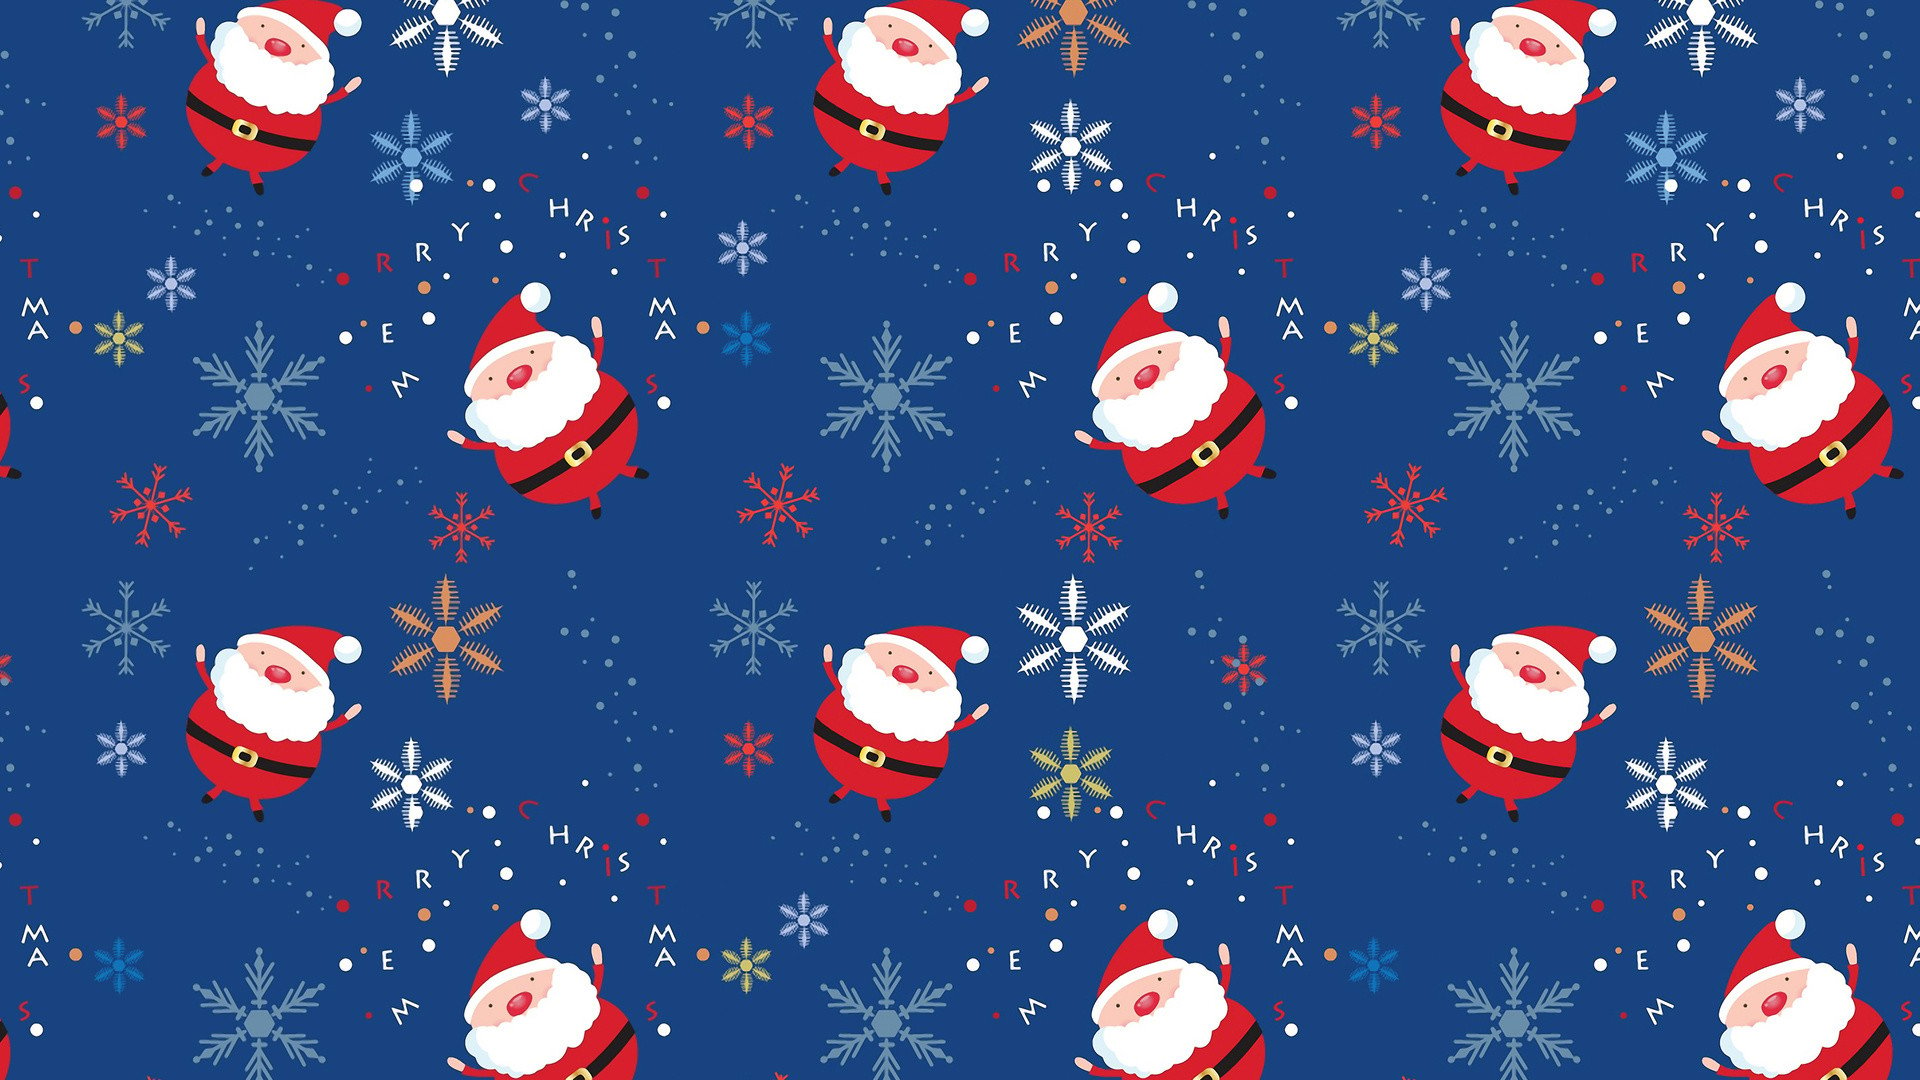 Cute Christmas Desktop Backgrounds images